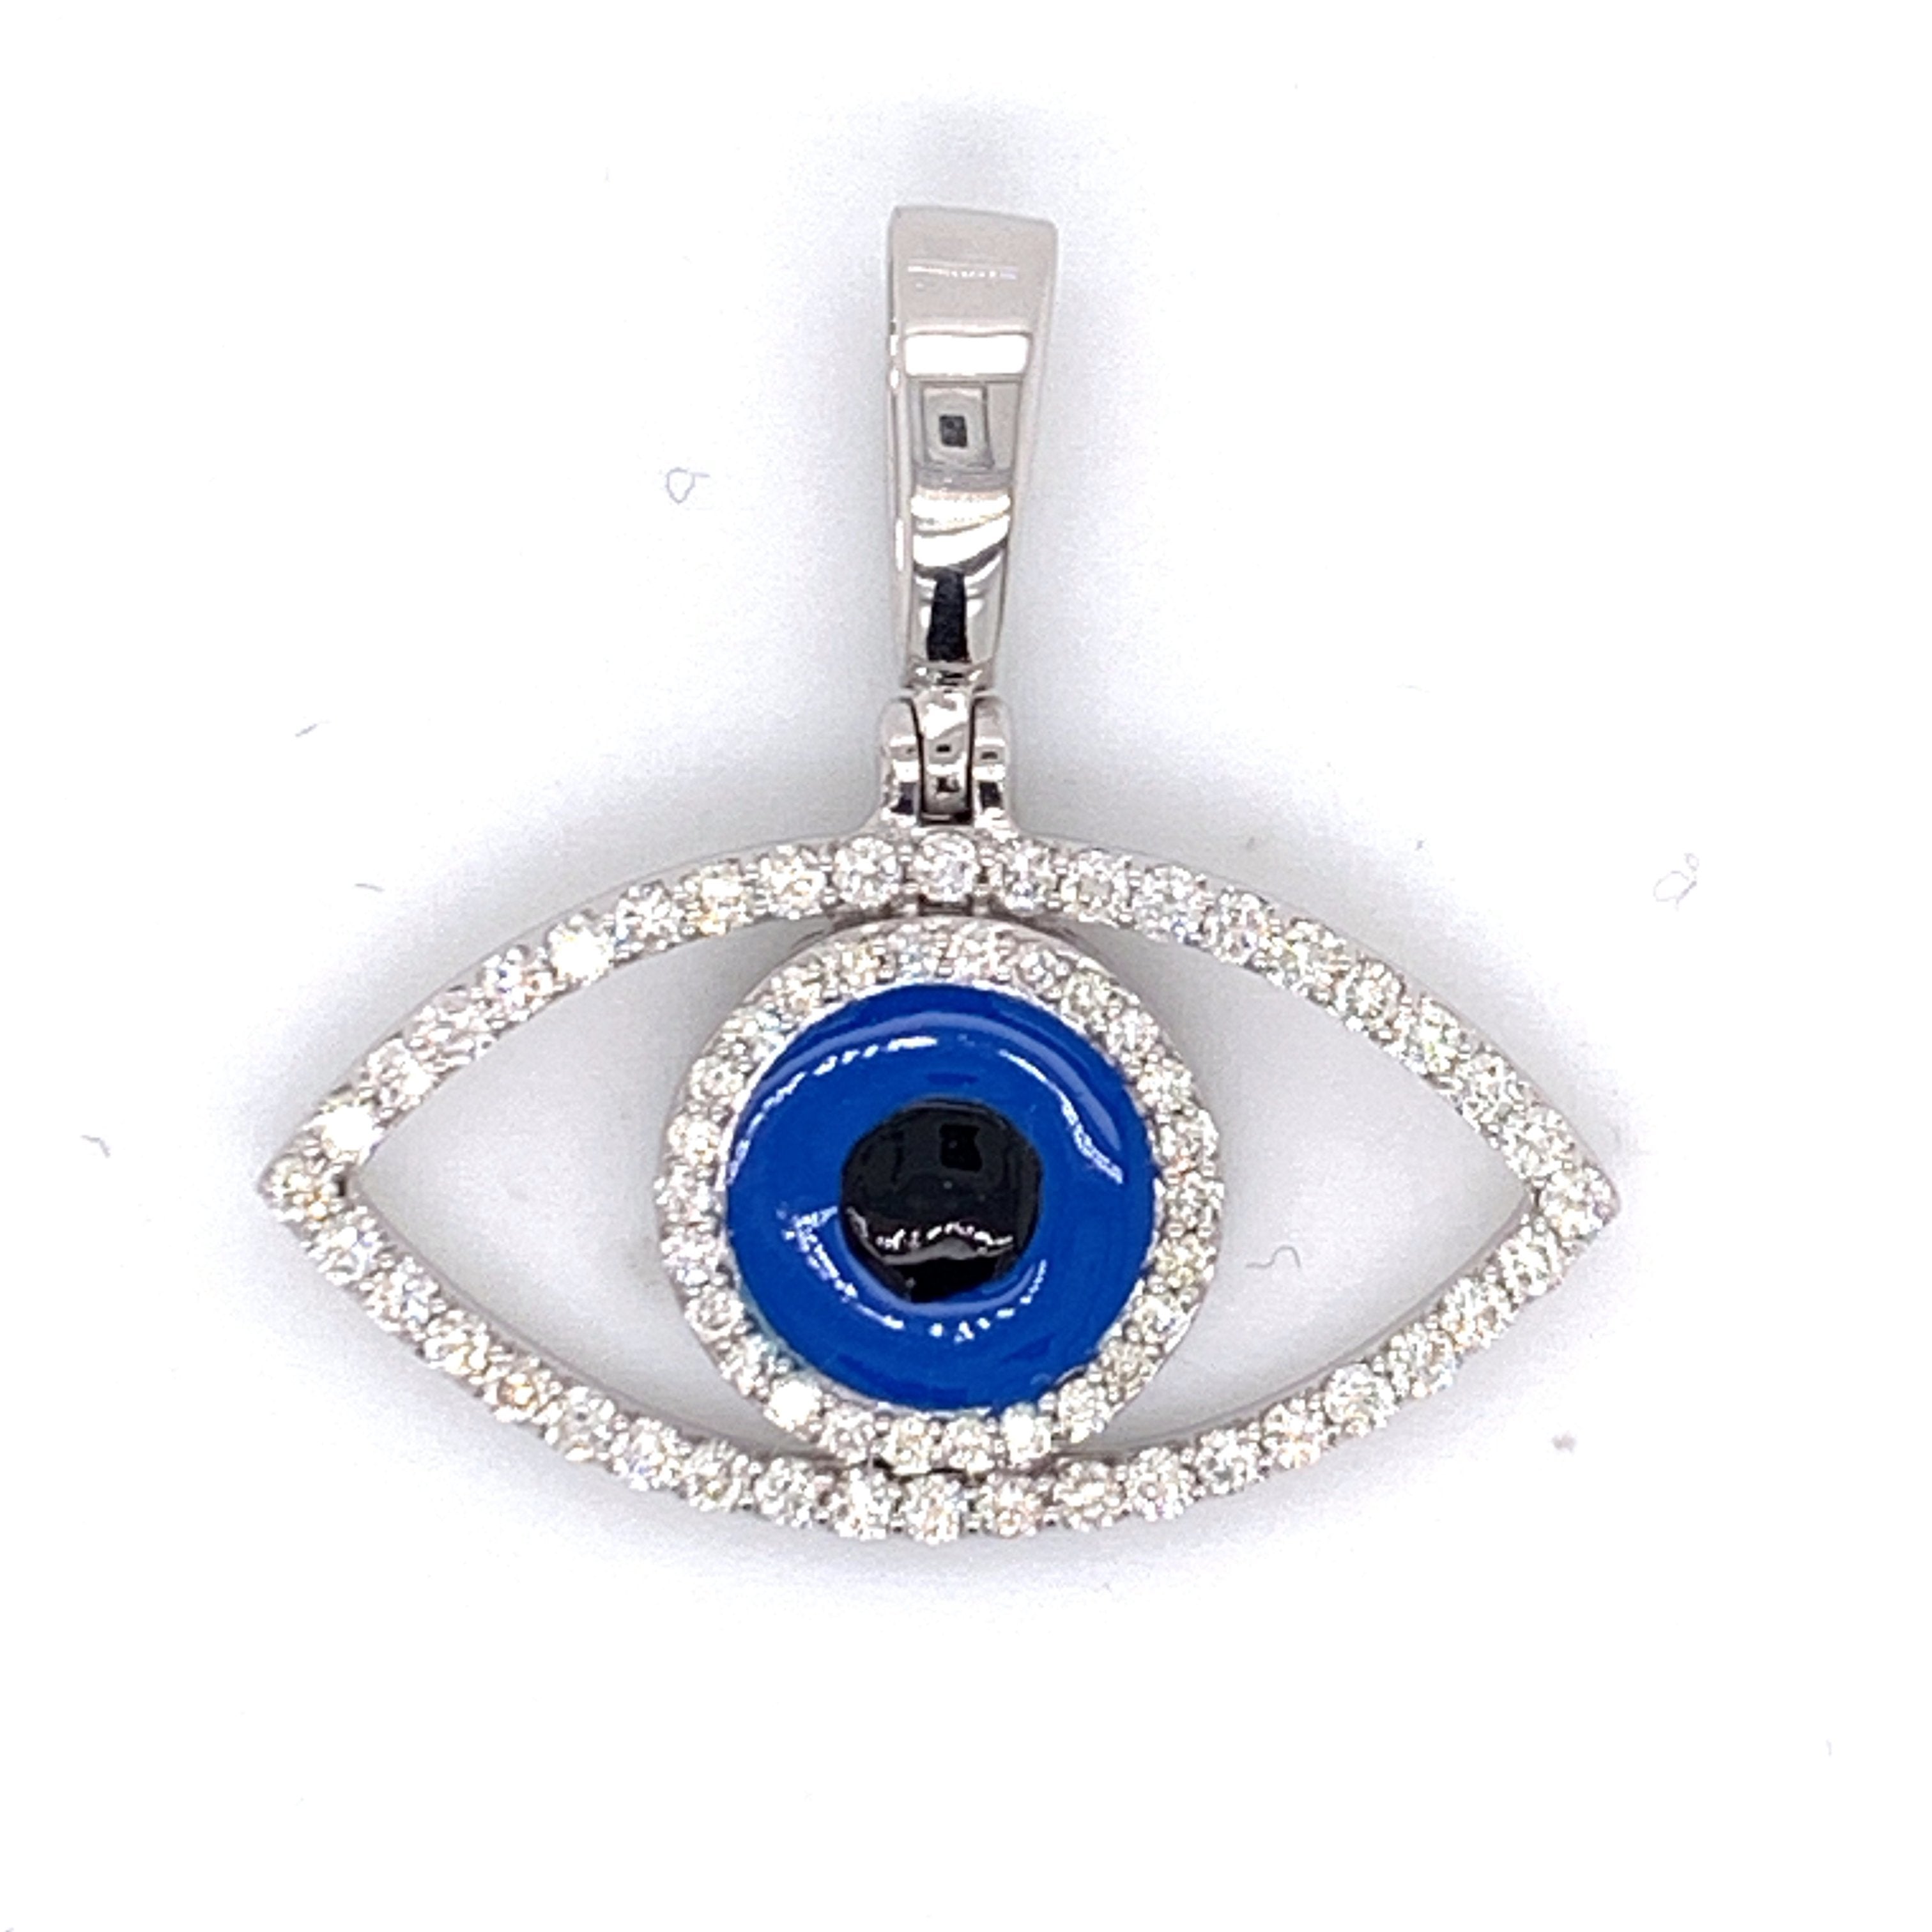 0.75 CT. Diamond Protection Evil Eye Pendant in White Gold - White Carat Diamonds 